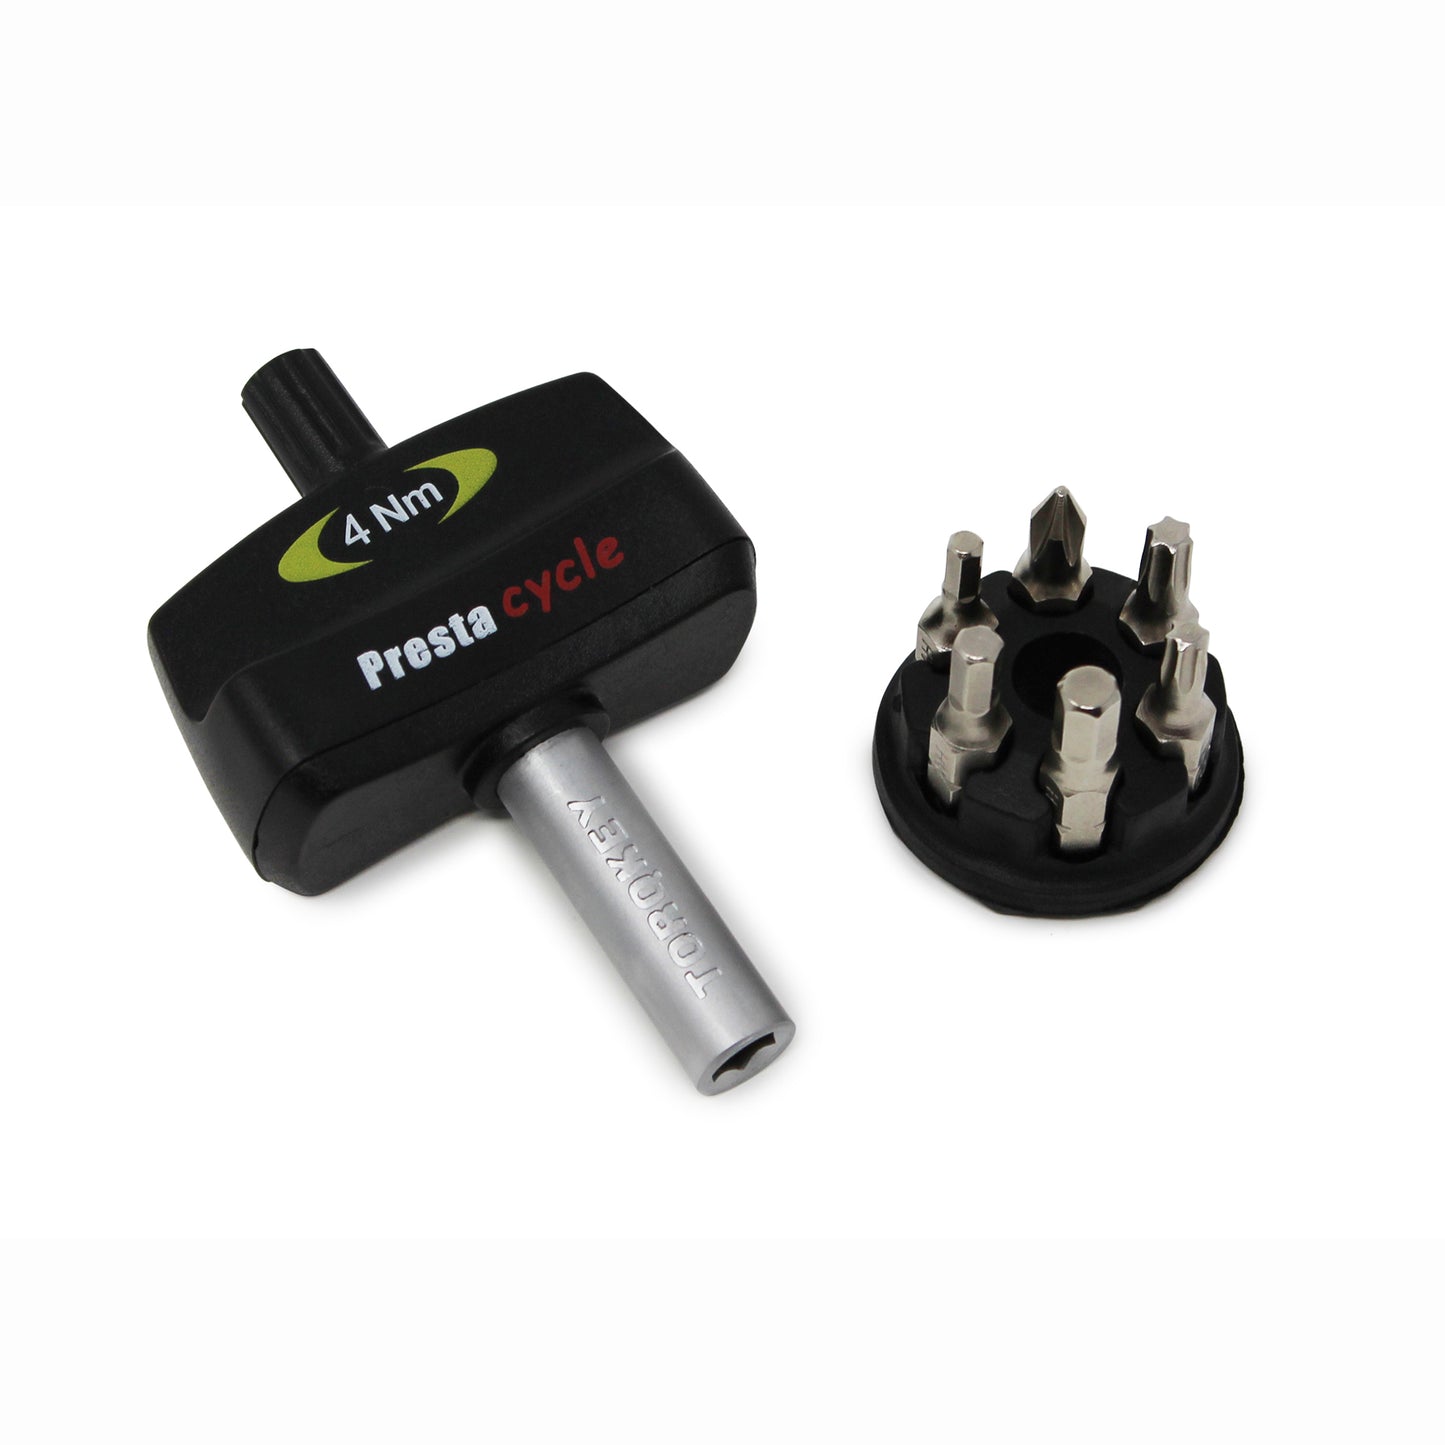 Prestacycle Mini TorqKeys - 4Nm Preset Torque Tool w/6 Bits & Holder